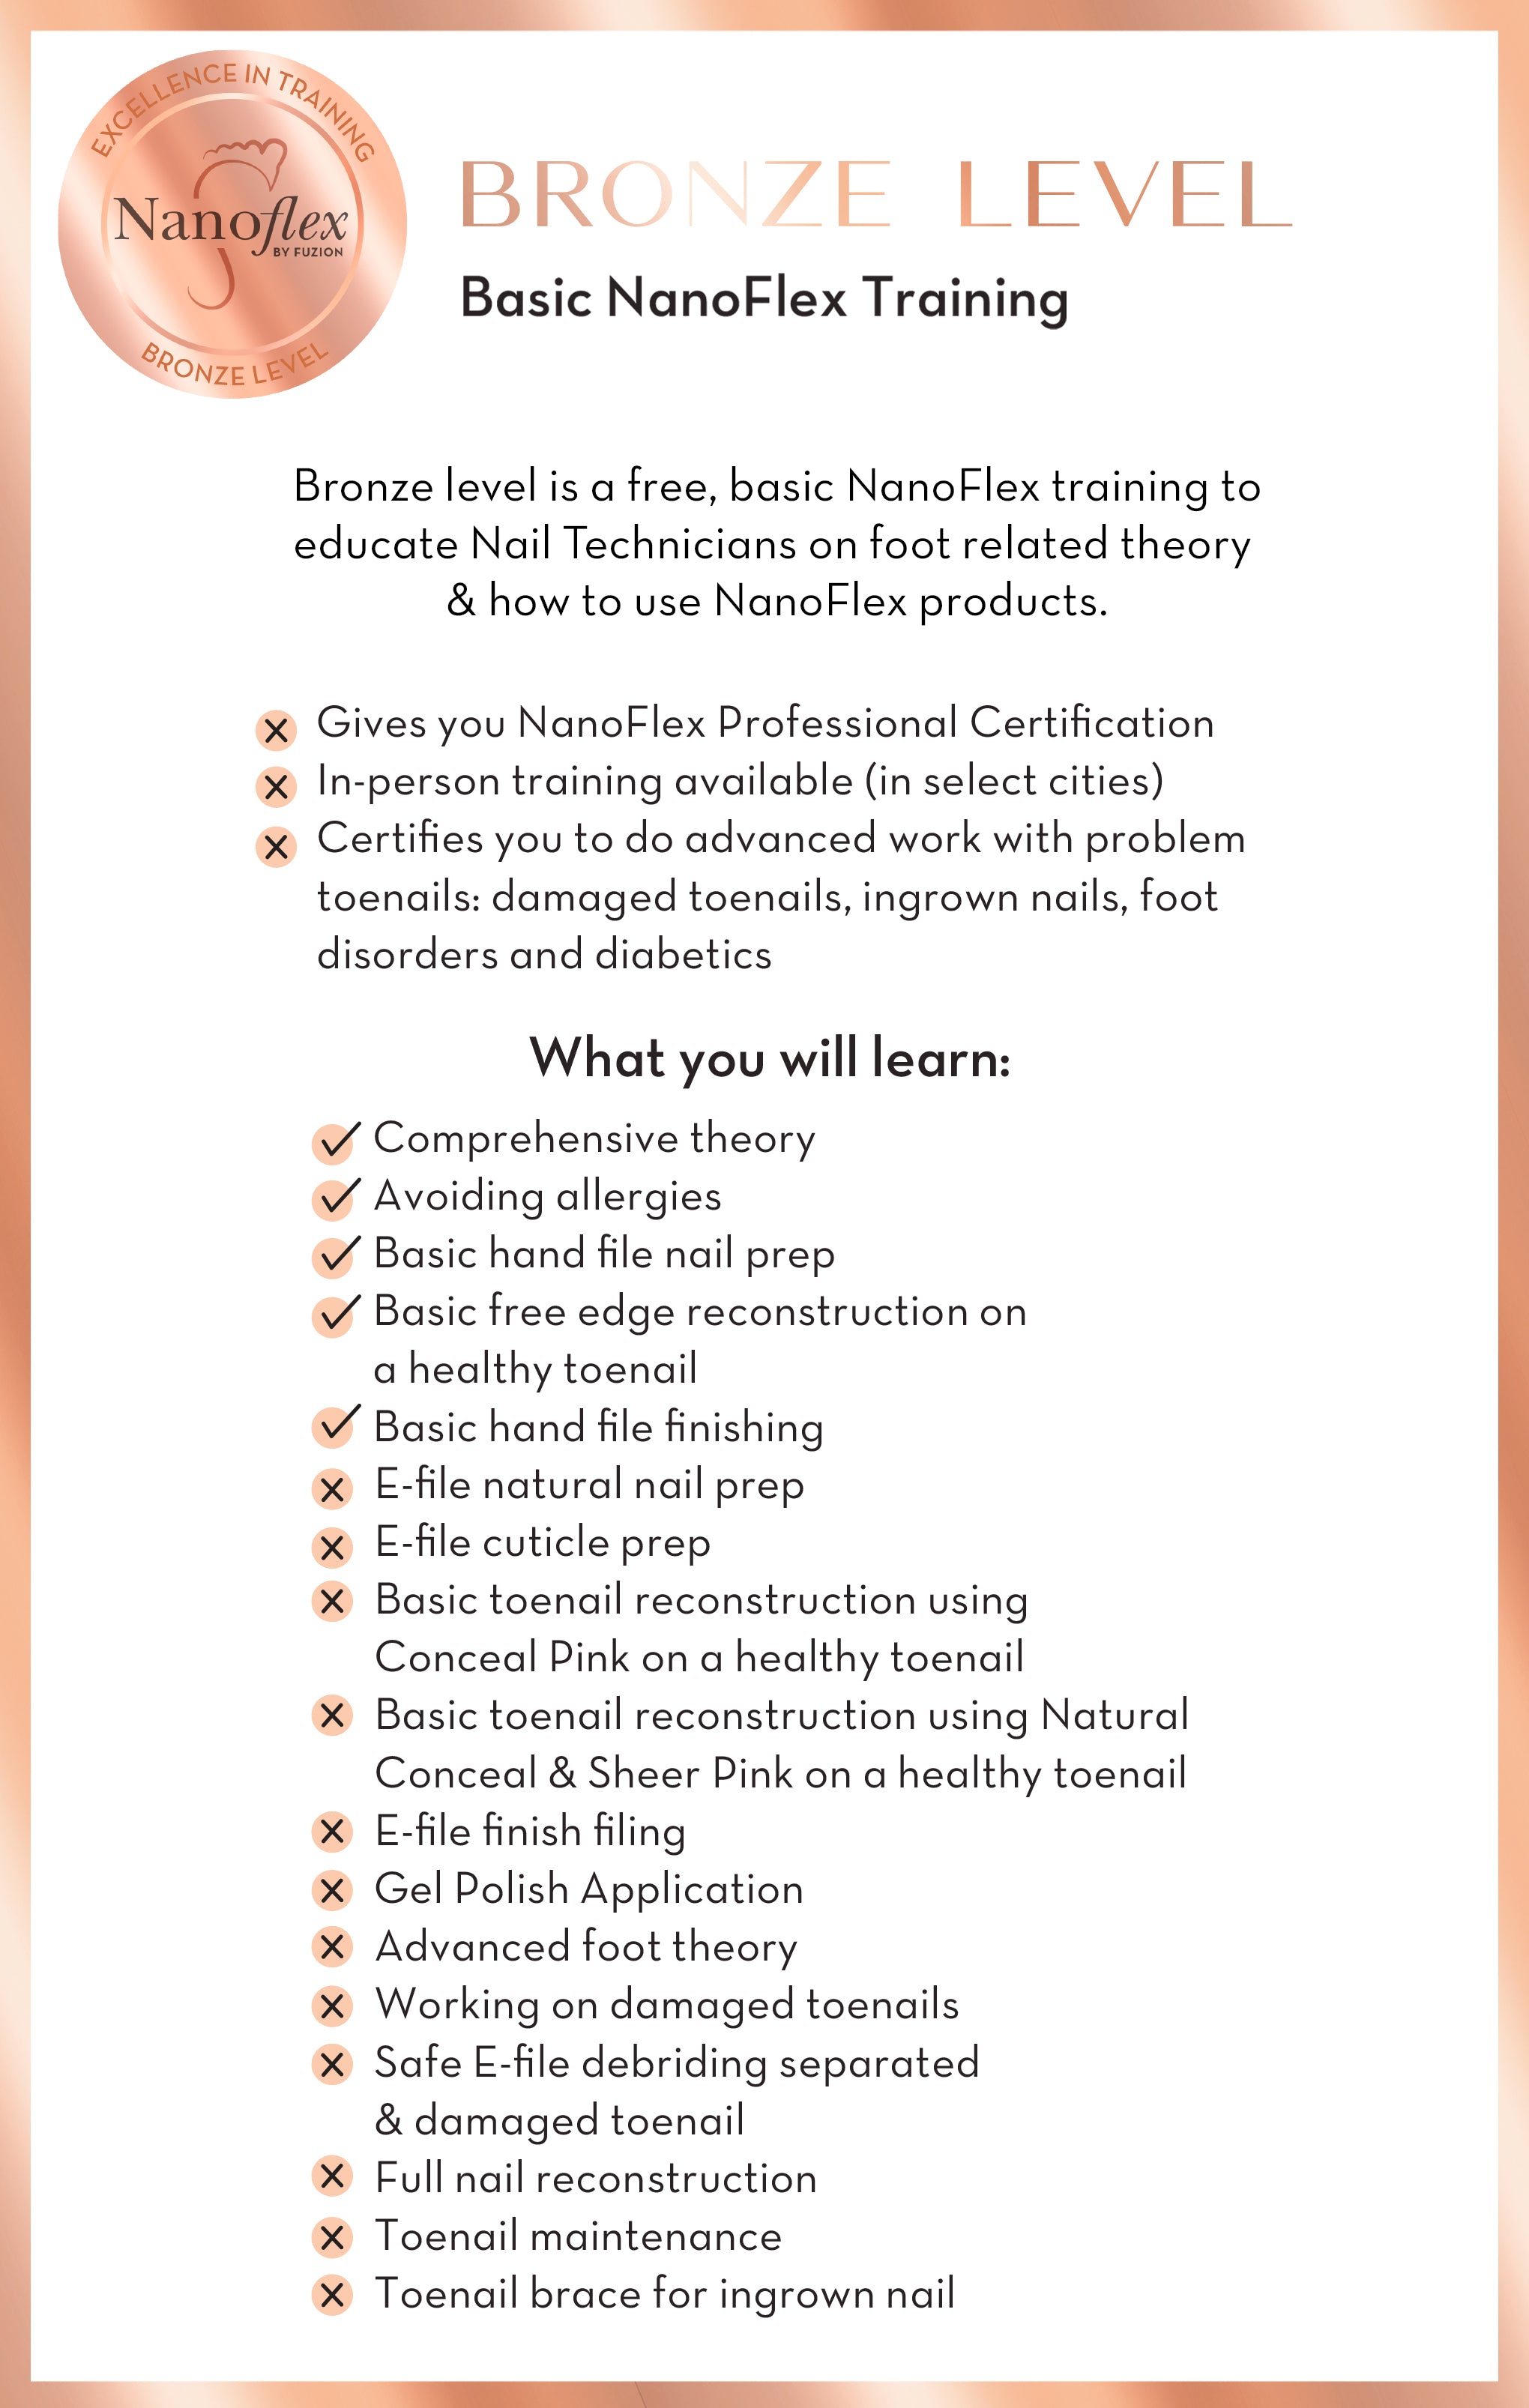 NanoFlex Bronze Level Course - Free Online!